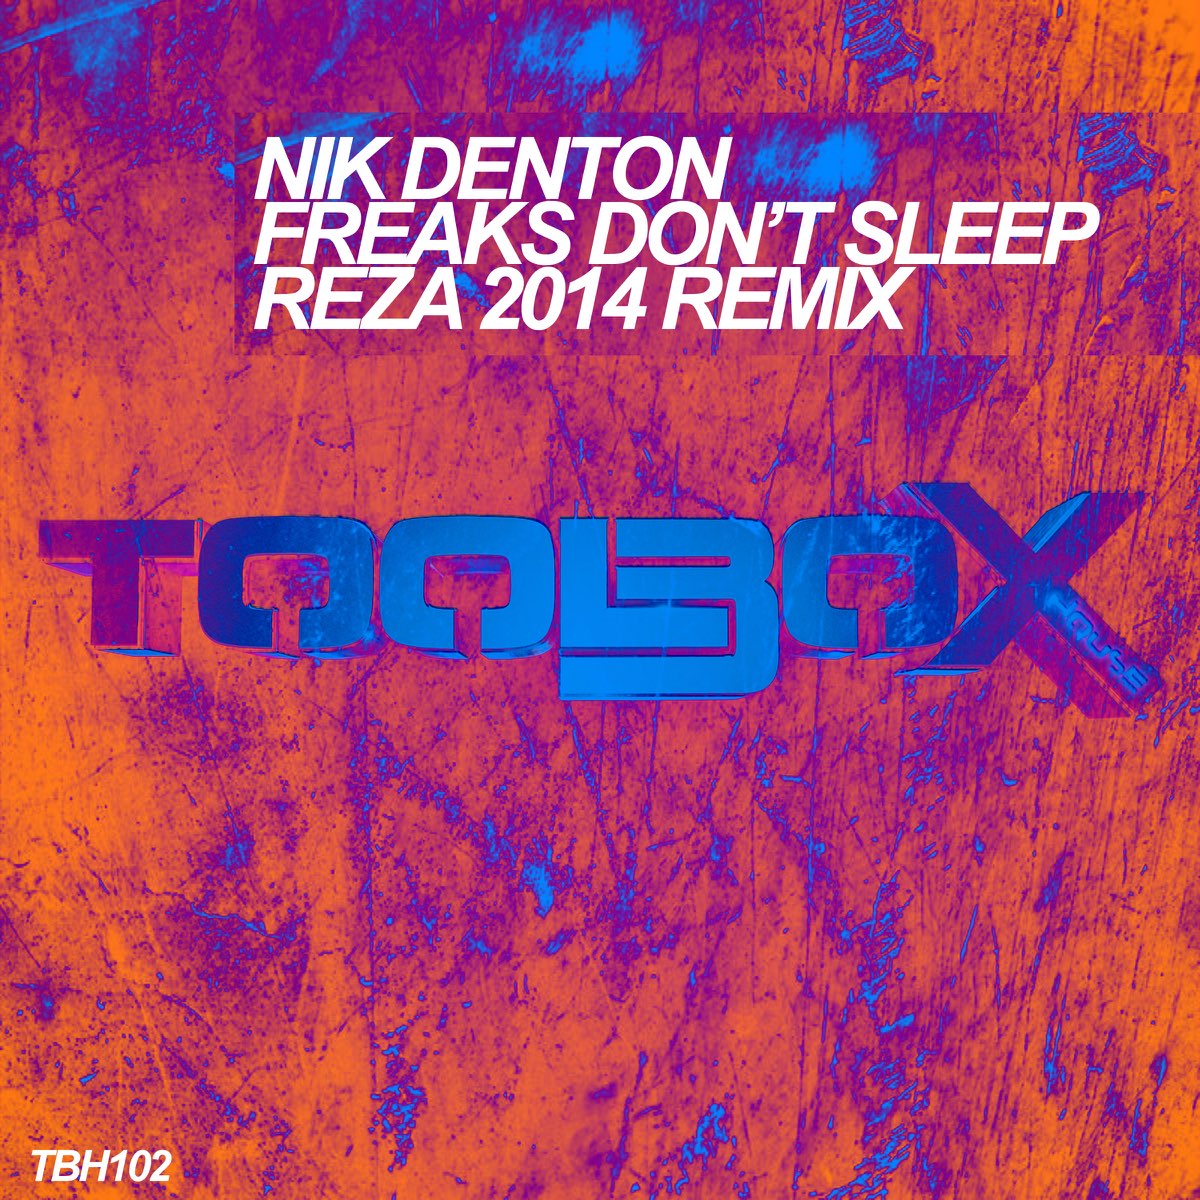 Nik Denton musica. Don Freaks. Freaks don't fail me Now. Nik remix